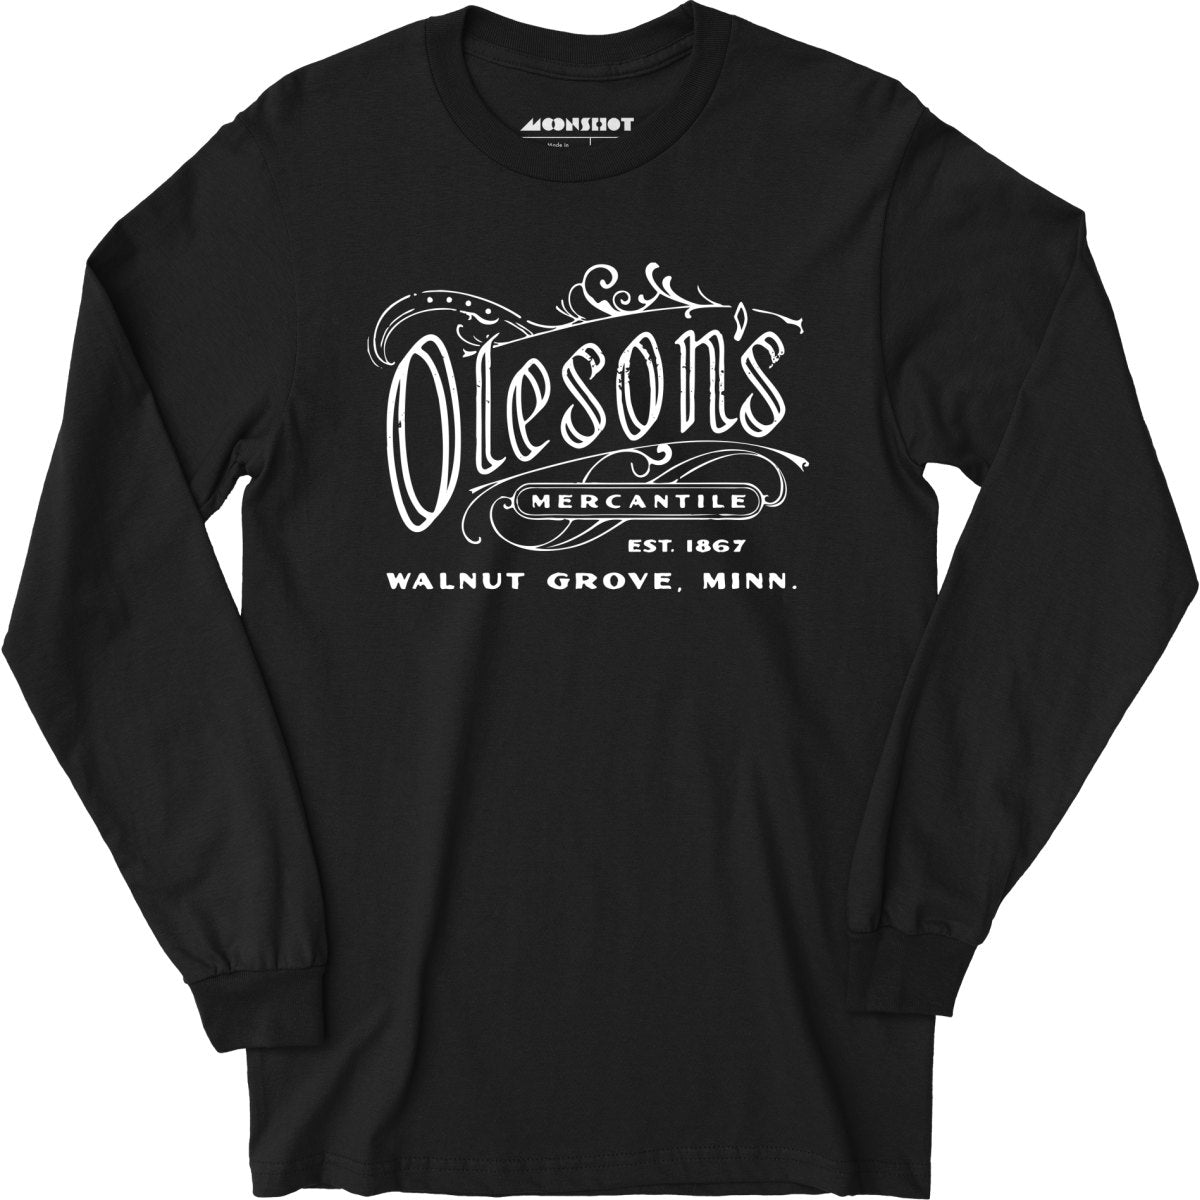 Oleson's Mercantile - Little House on the Prairie - Long Sleeve T-Shirt